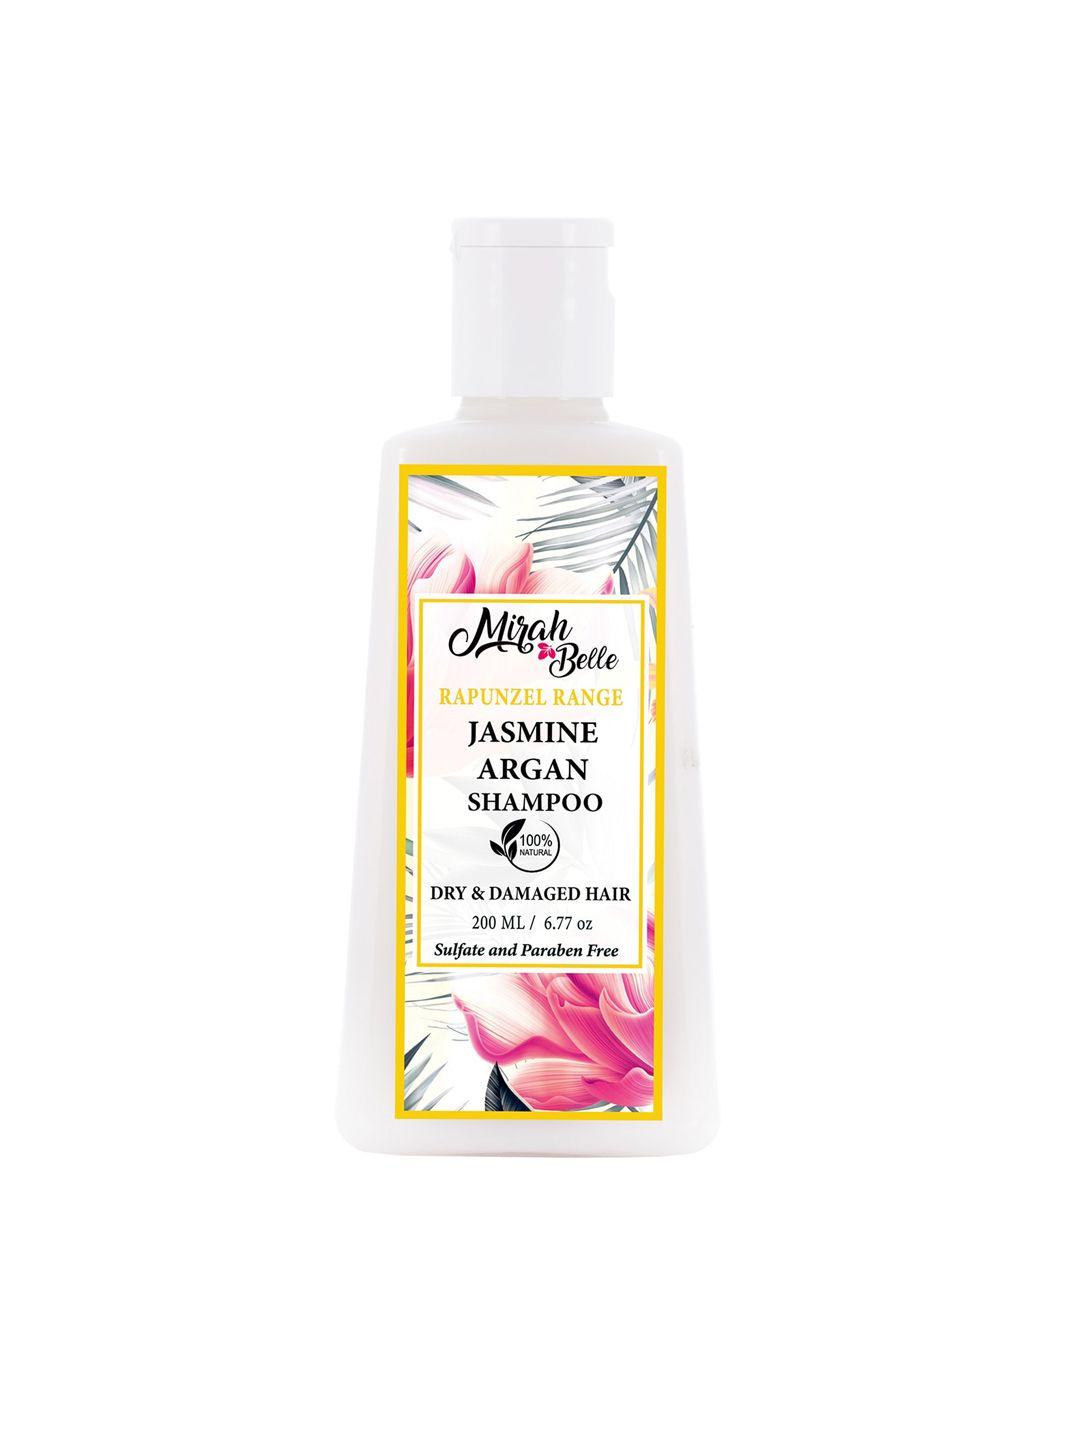 mirah belle jasmine argan shampoo for dry hair - 200 ml